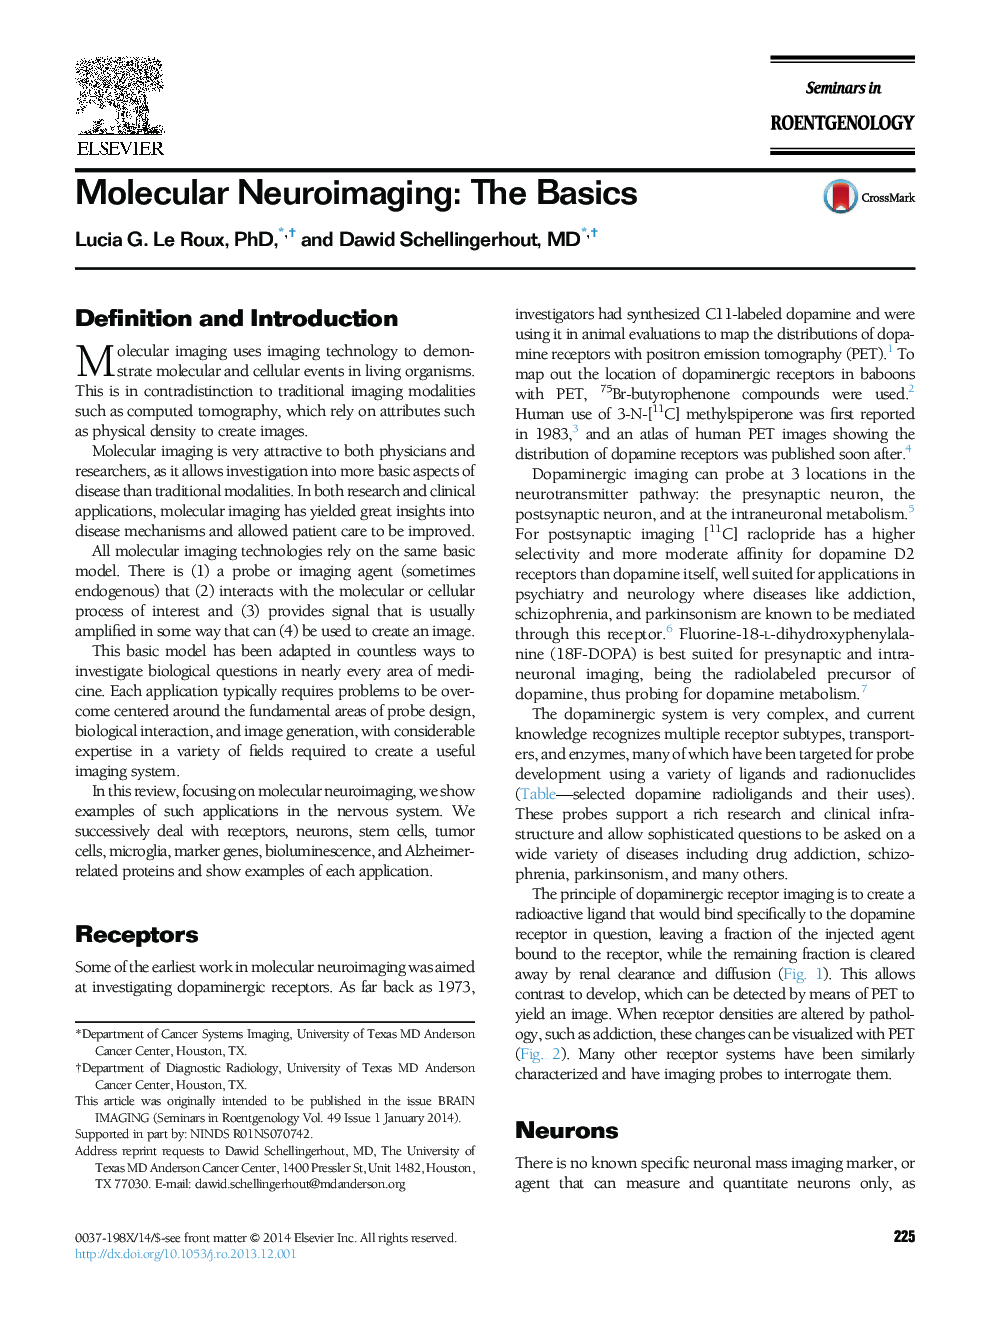 Molecular Neuroimaging: The Basics